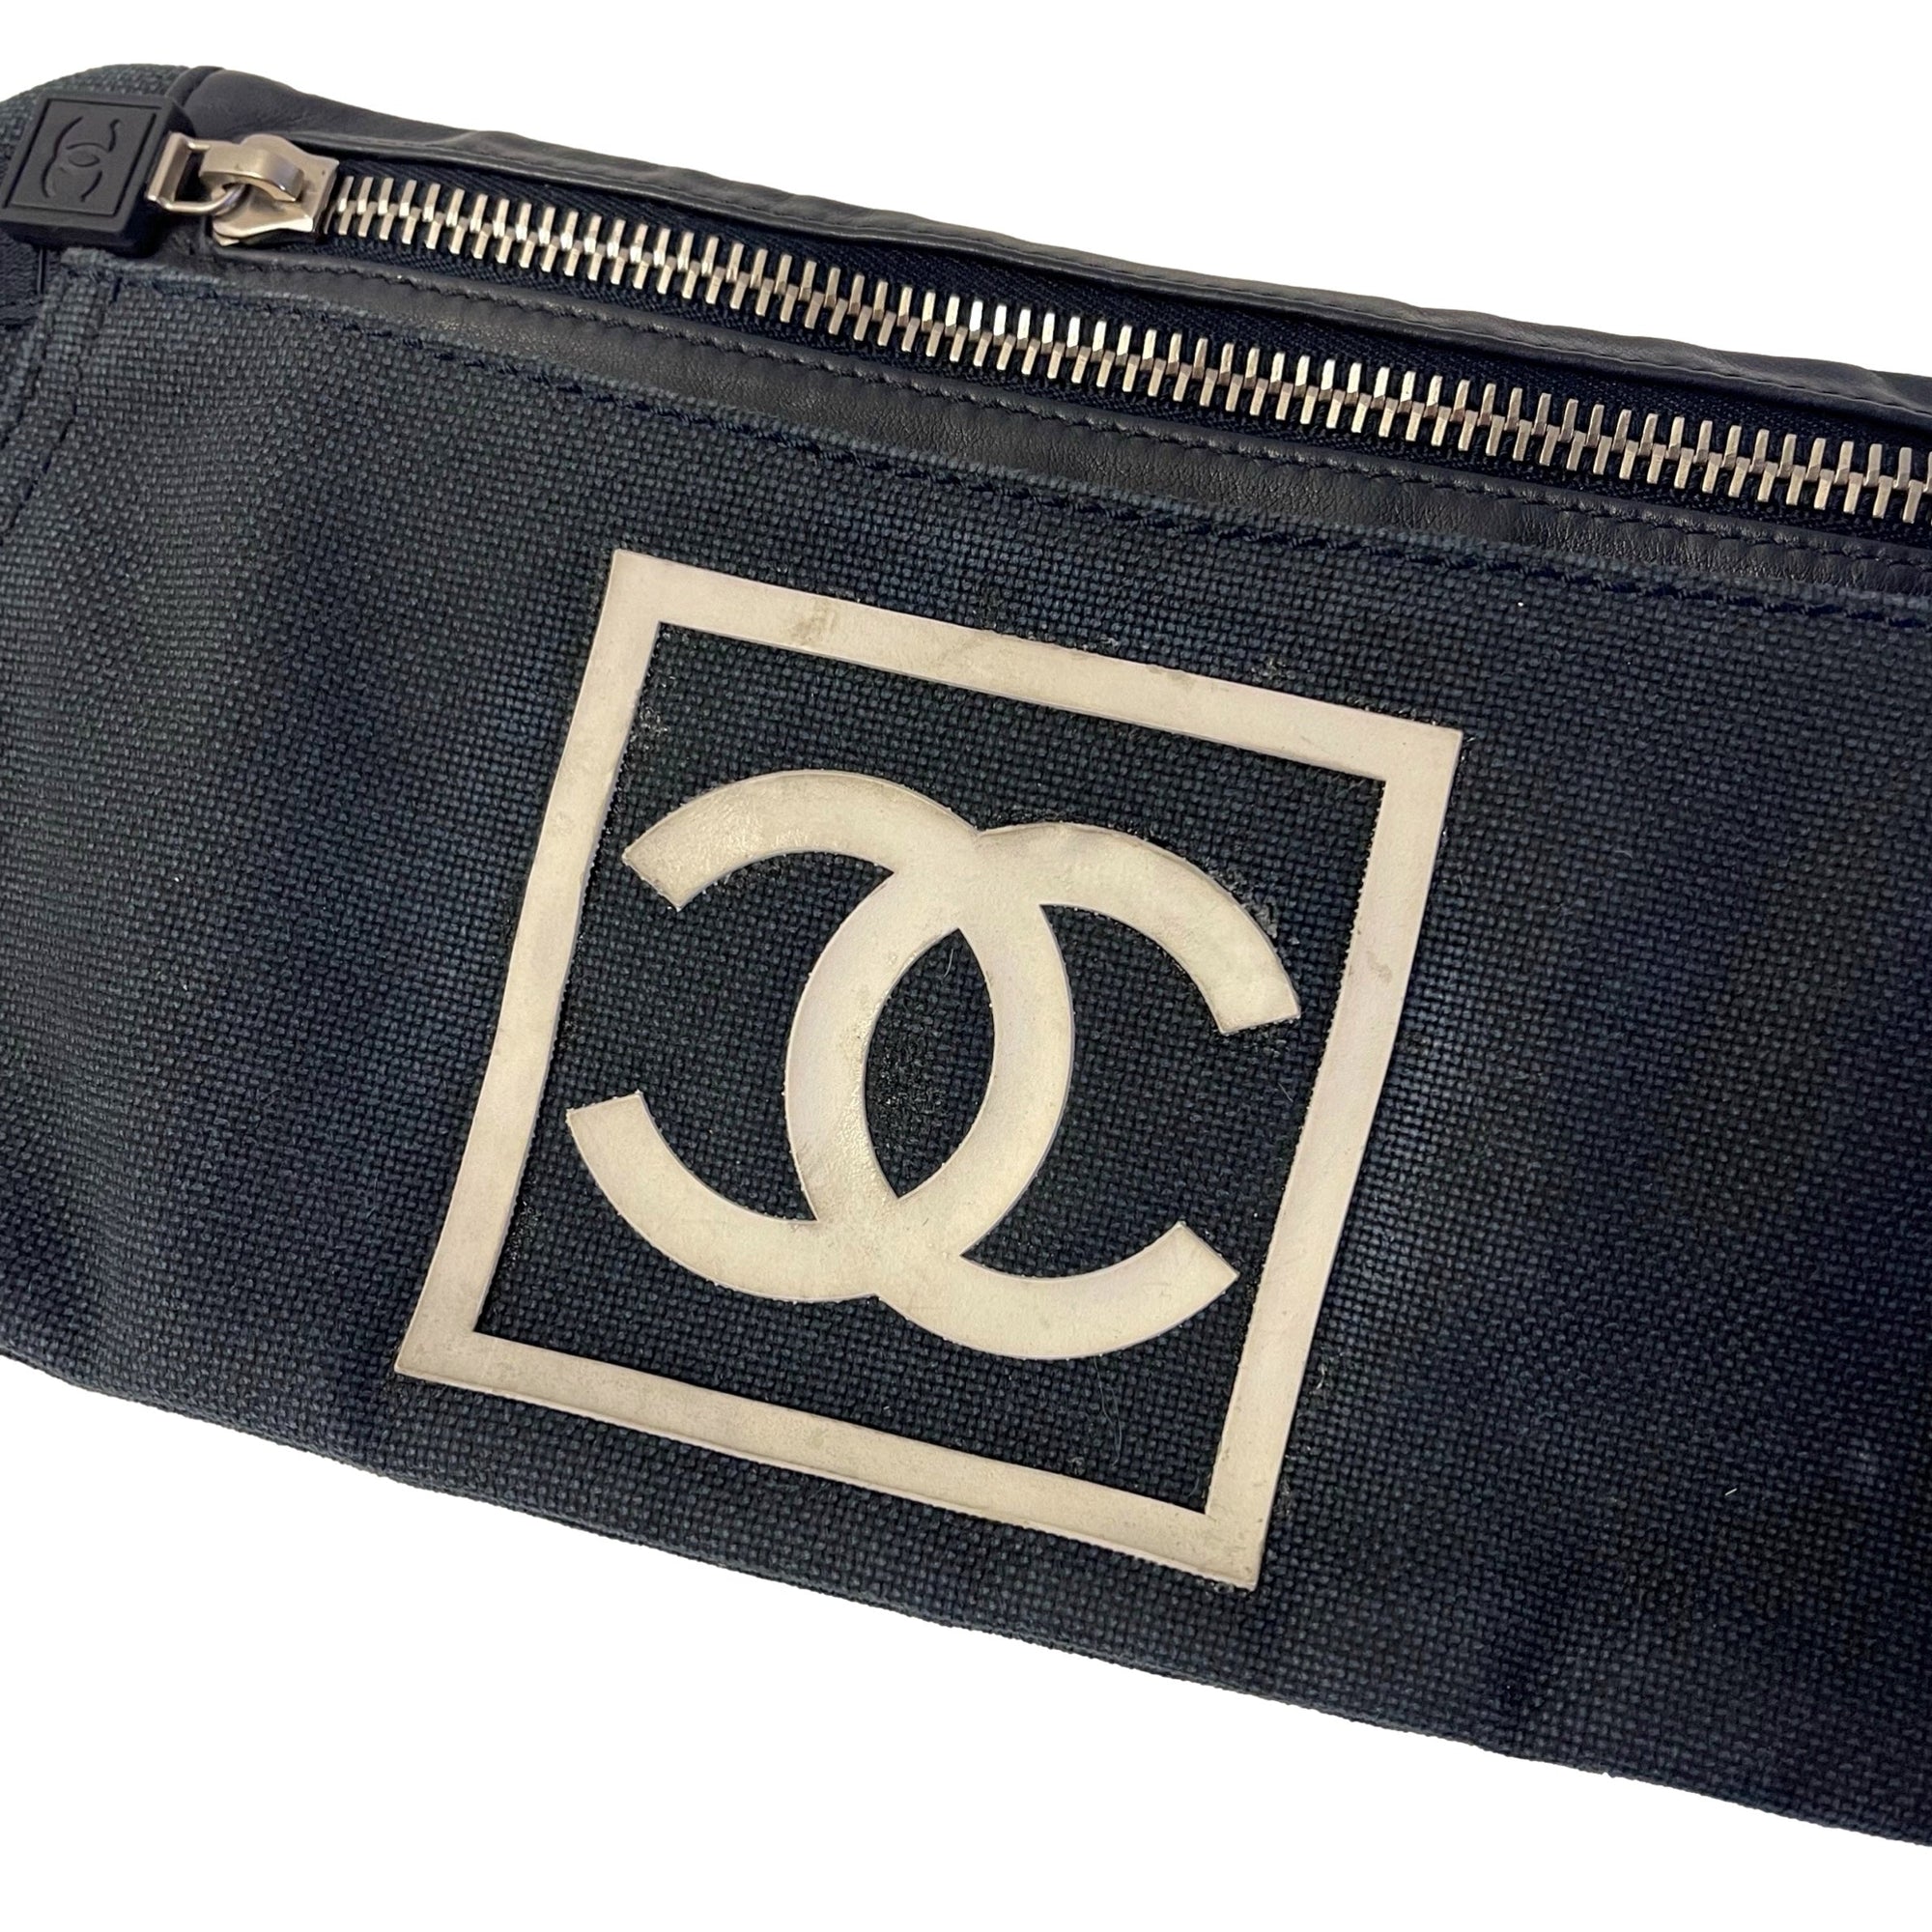 Chanel Navy Sport Belt Bag